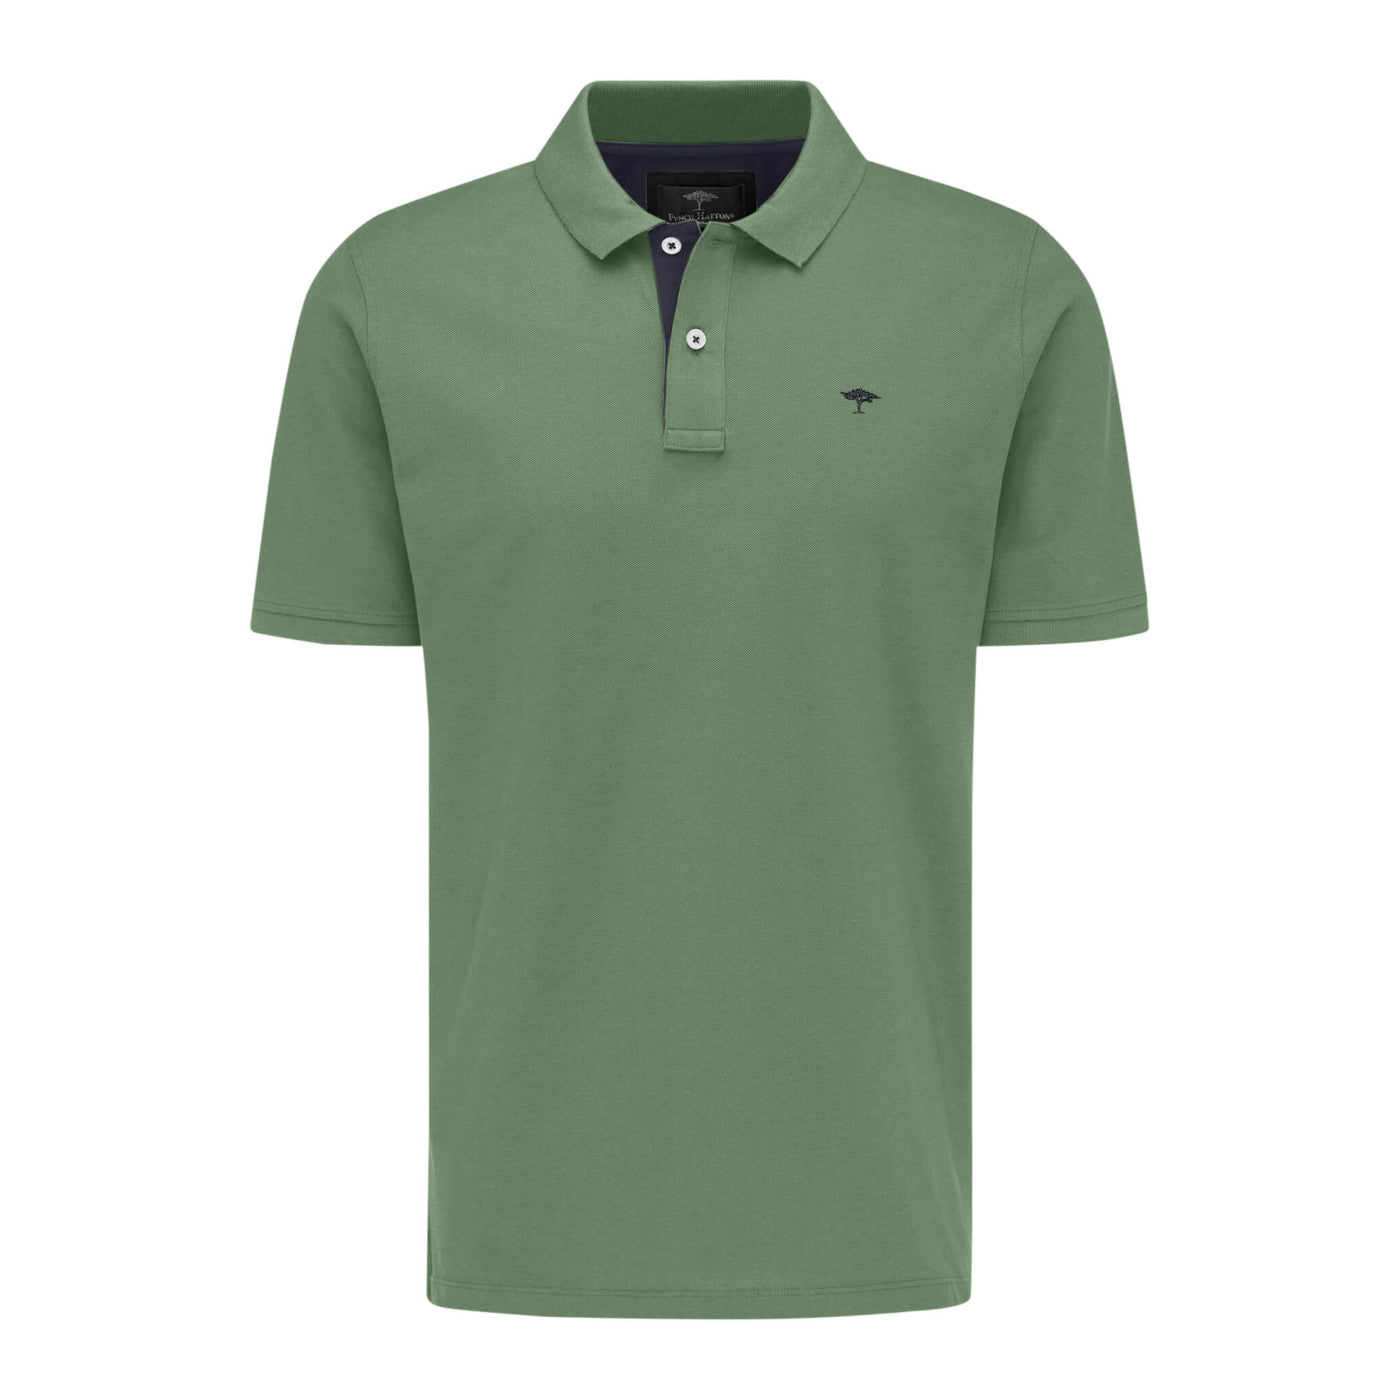 Fynch Hatton 1313 1711 700 Spring Green Polo Shirt